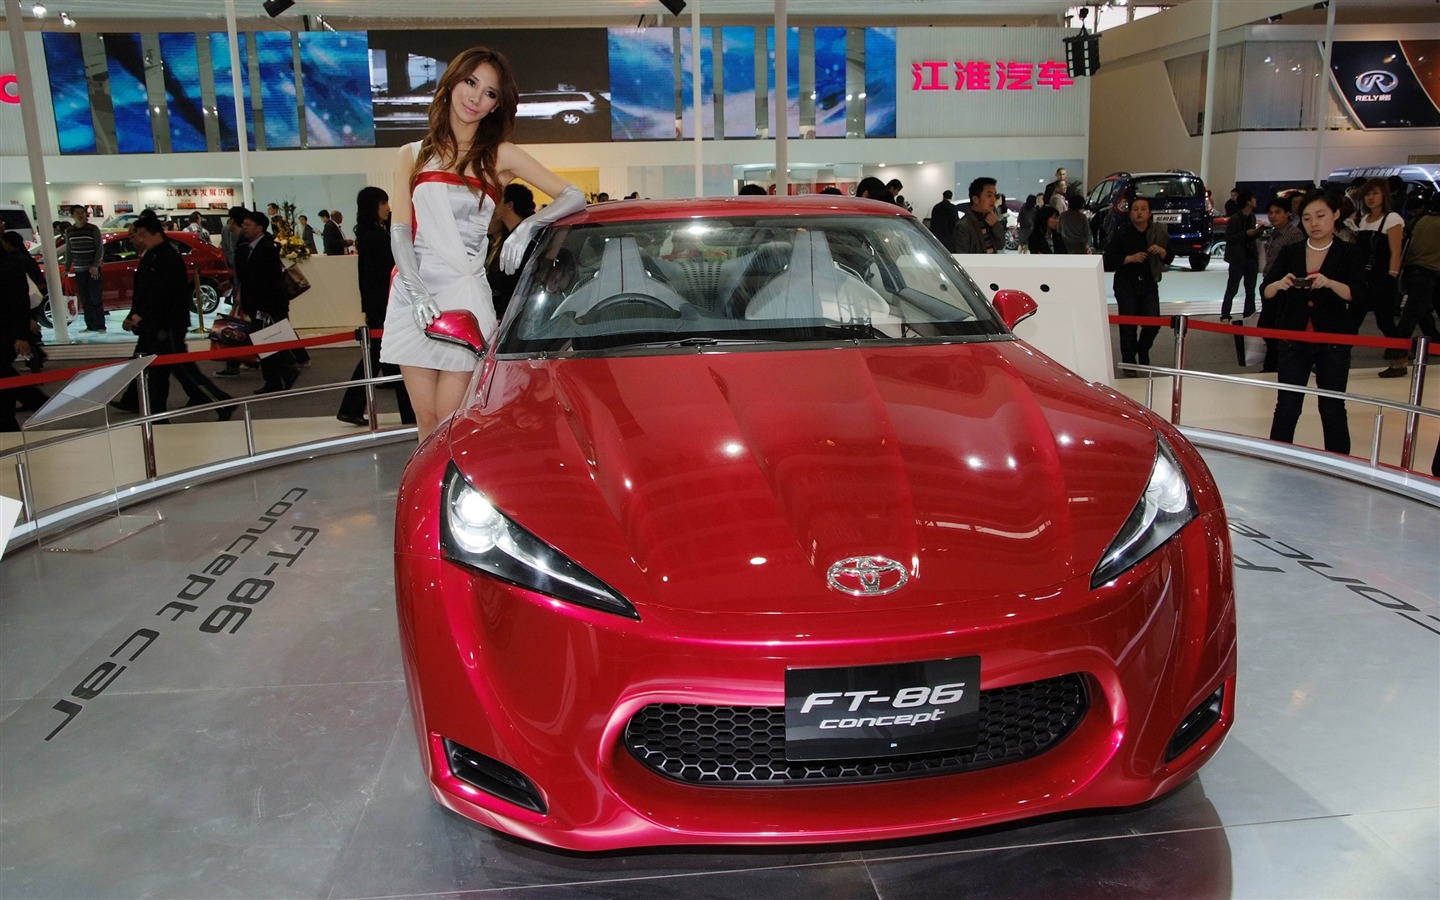 2010 Salón Internacional del Automóvil de Beijing Heung Che belleza (obras barras de refuerzo) #23 - 1440x900